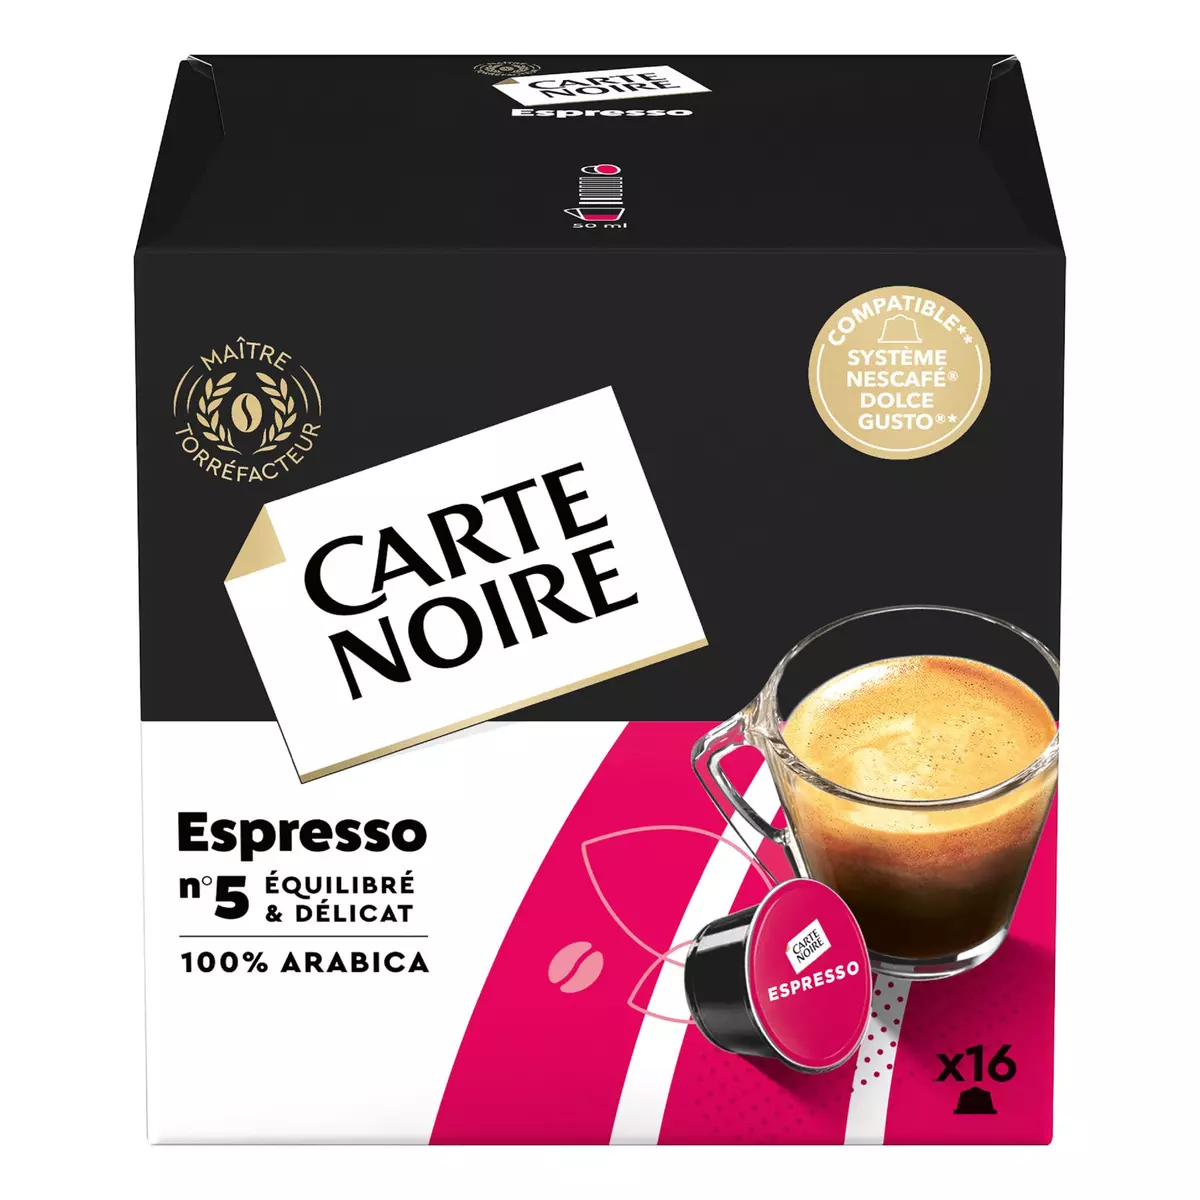 Capsules Nestle DOLCE GUSTO ESPRESSO pas cher - Café, dosettes - Achat  moins cher